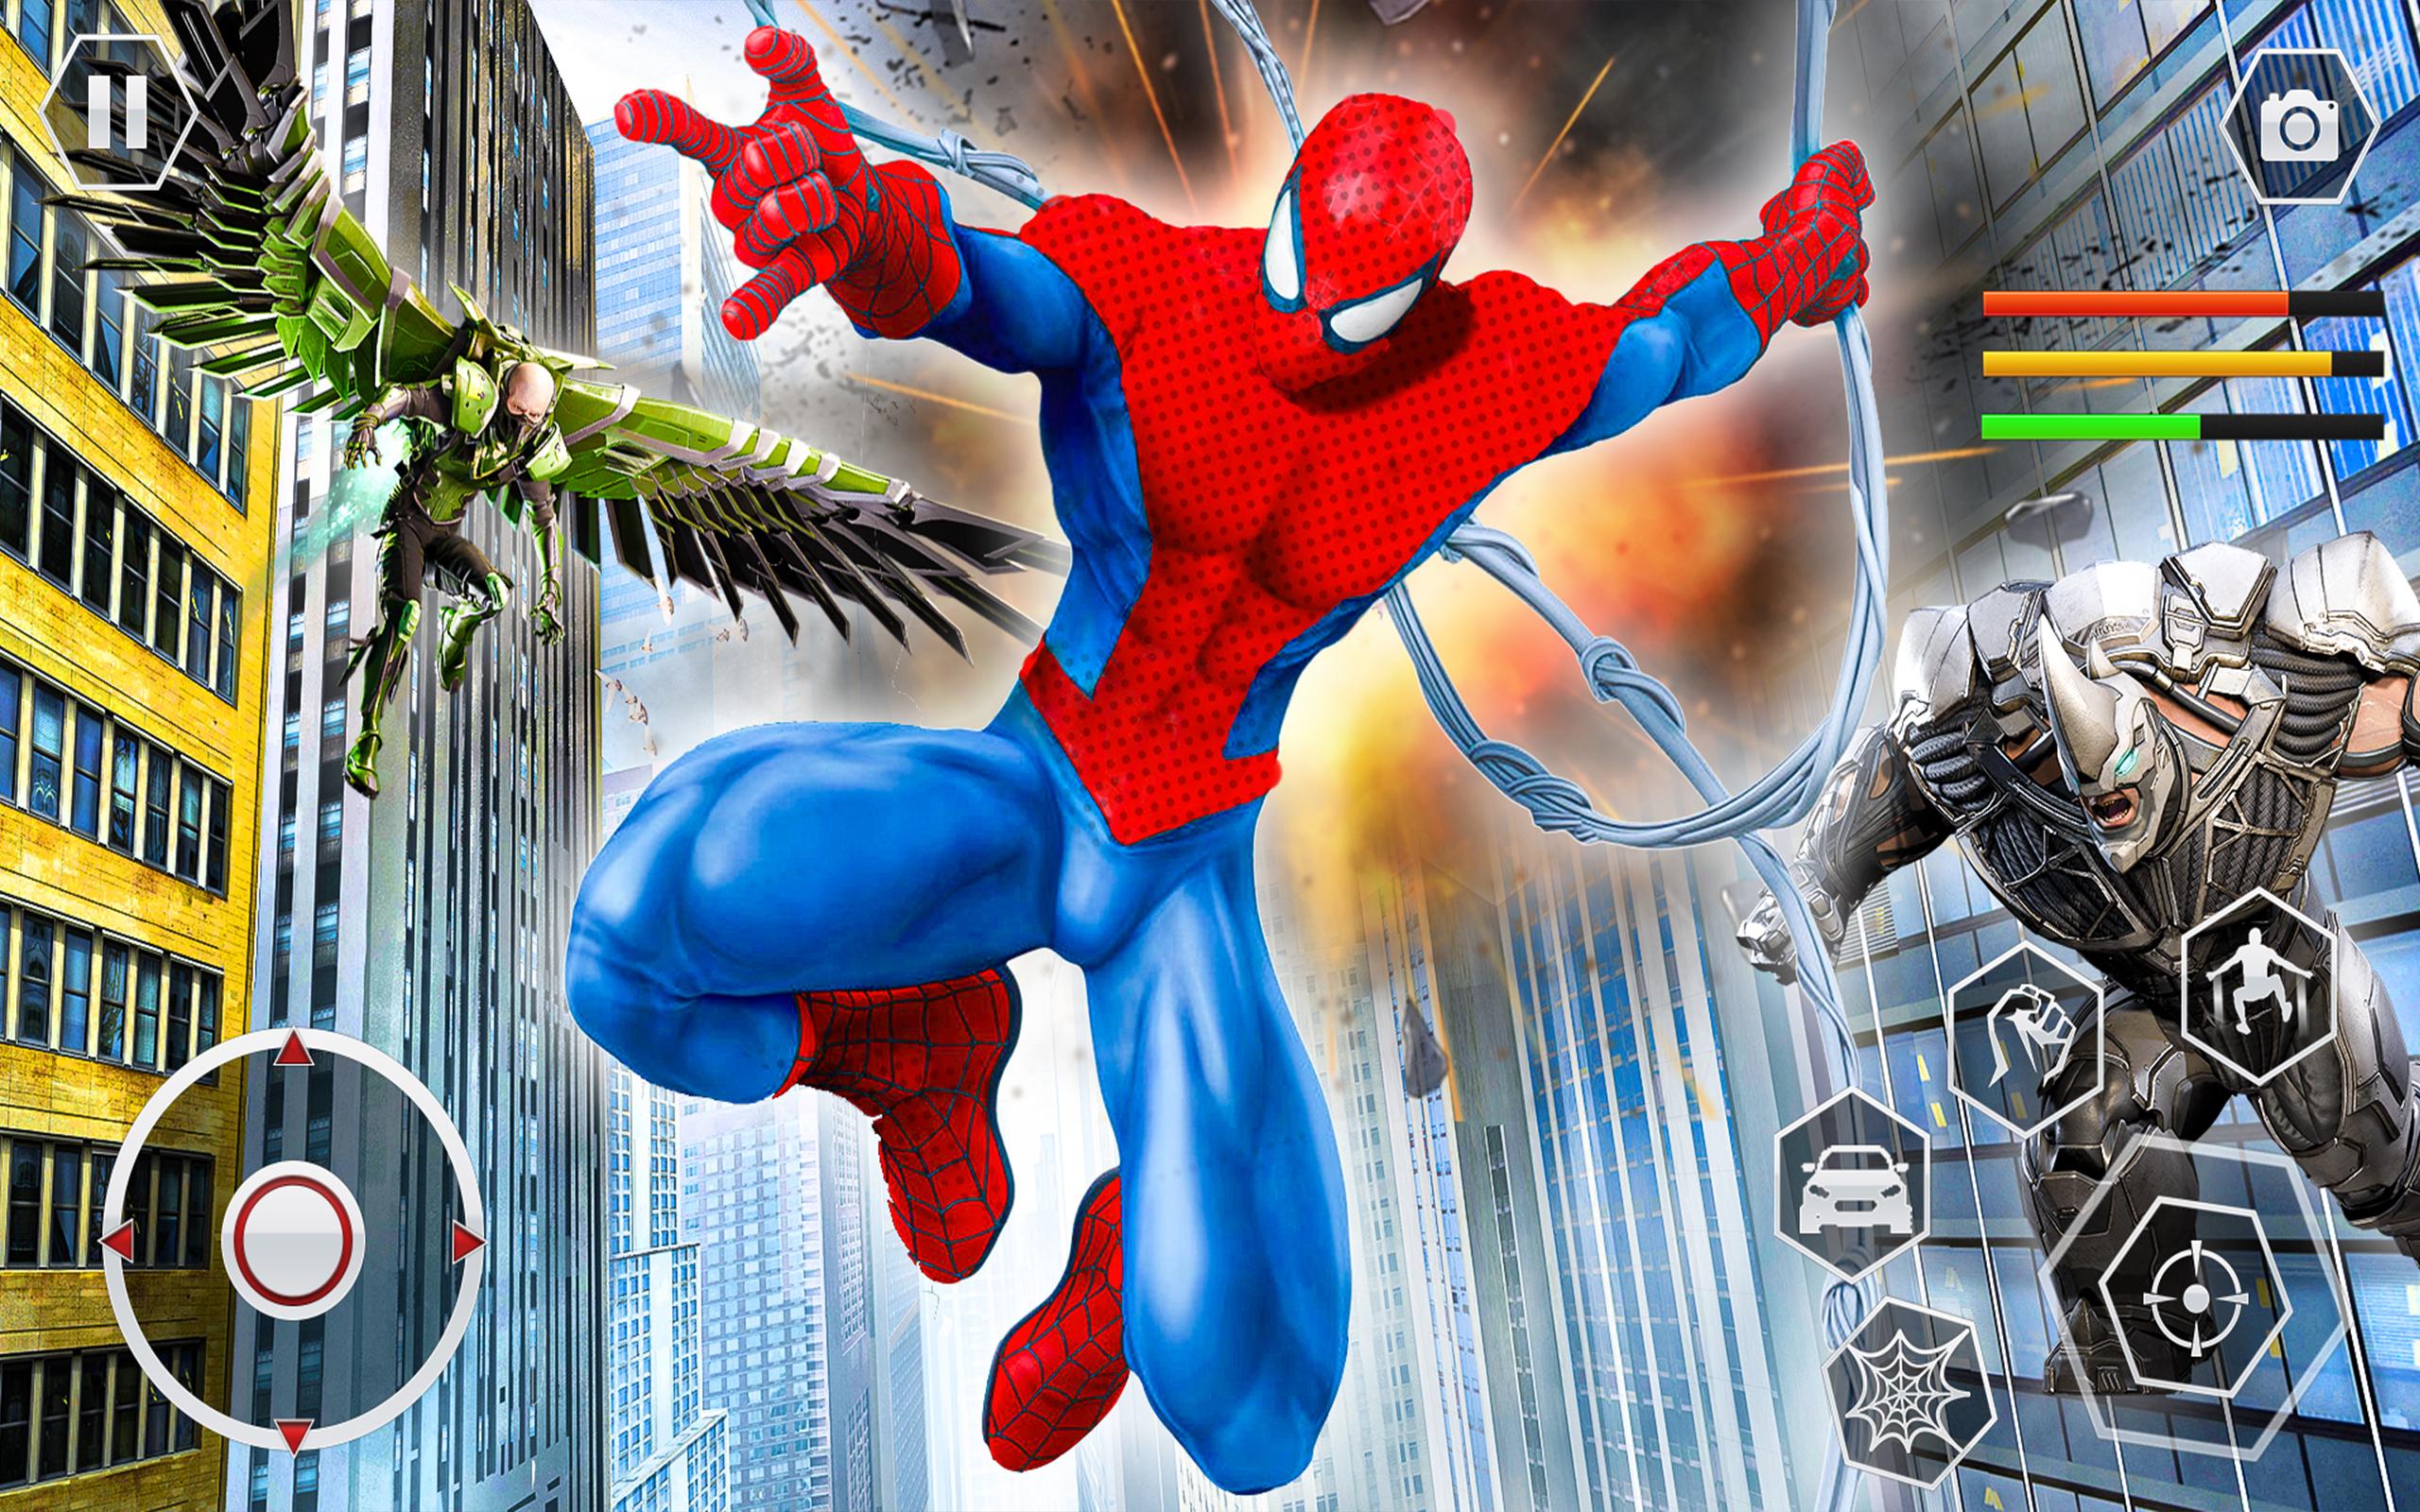 Spider Rope Superhero War Game - Crime City Battle 2.4 Screenshot 9